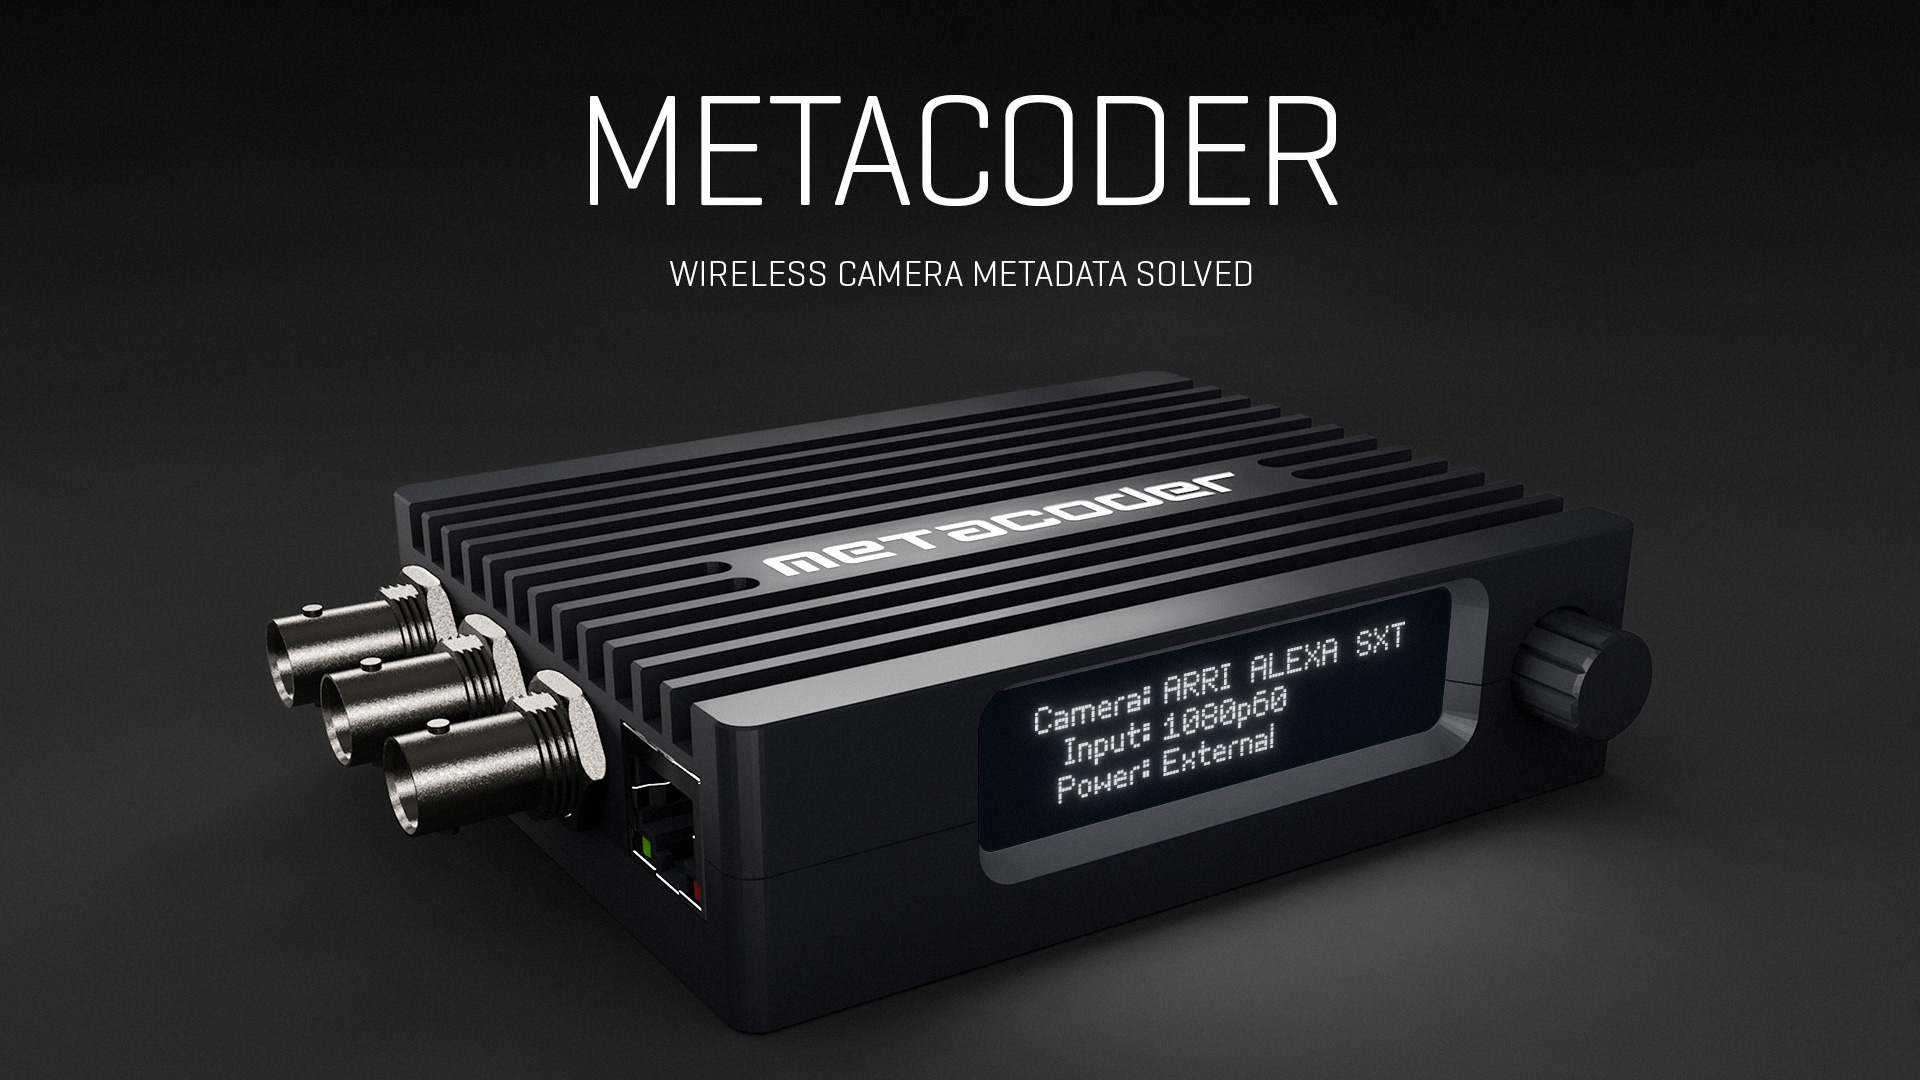 MetaCoder device